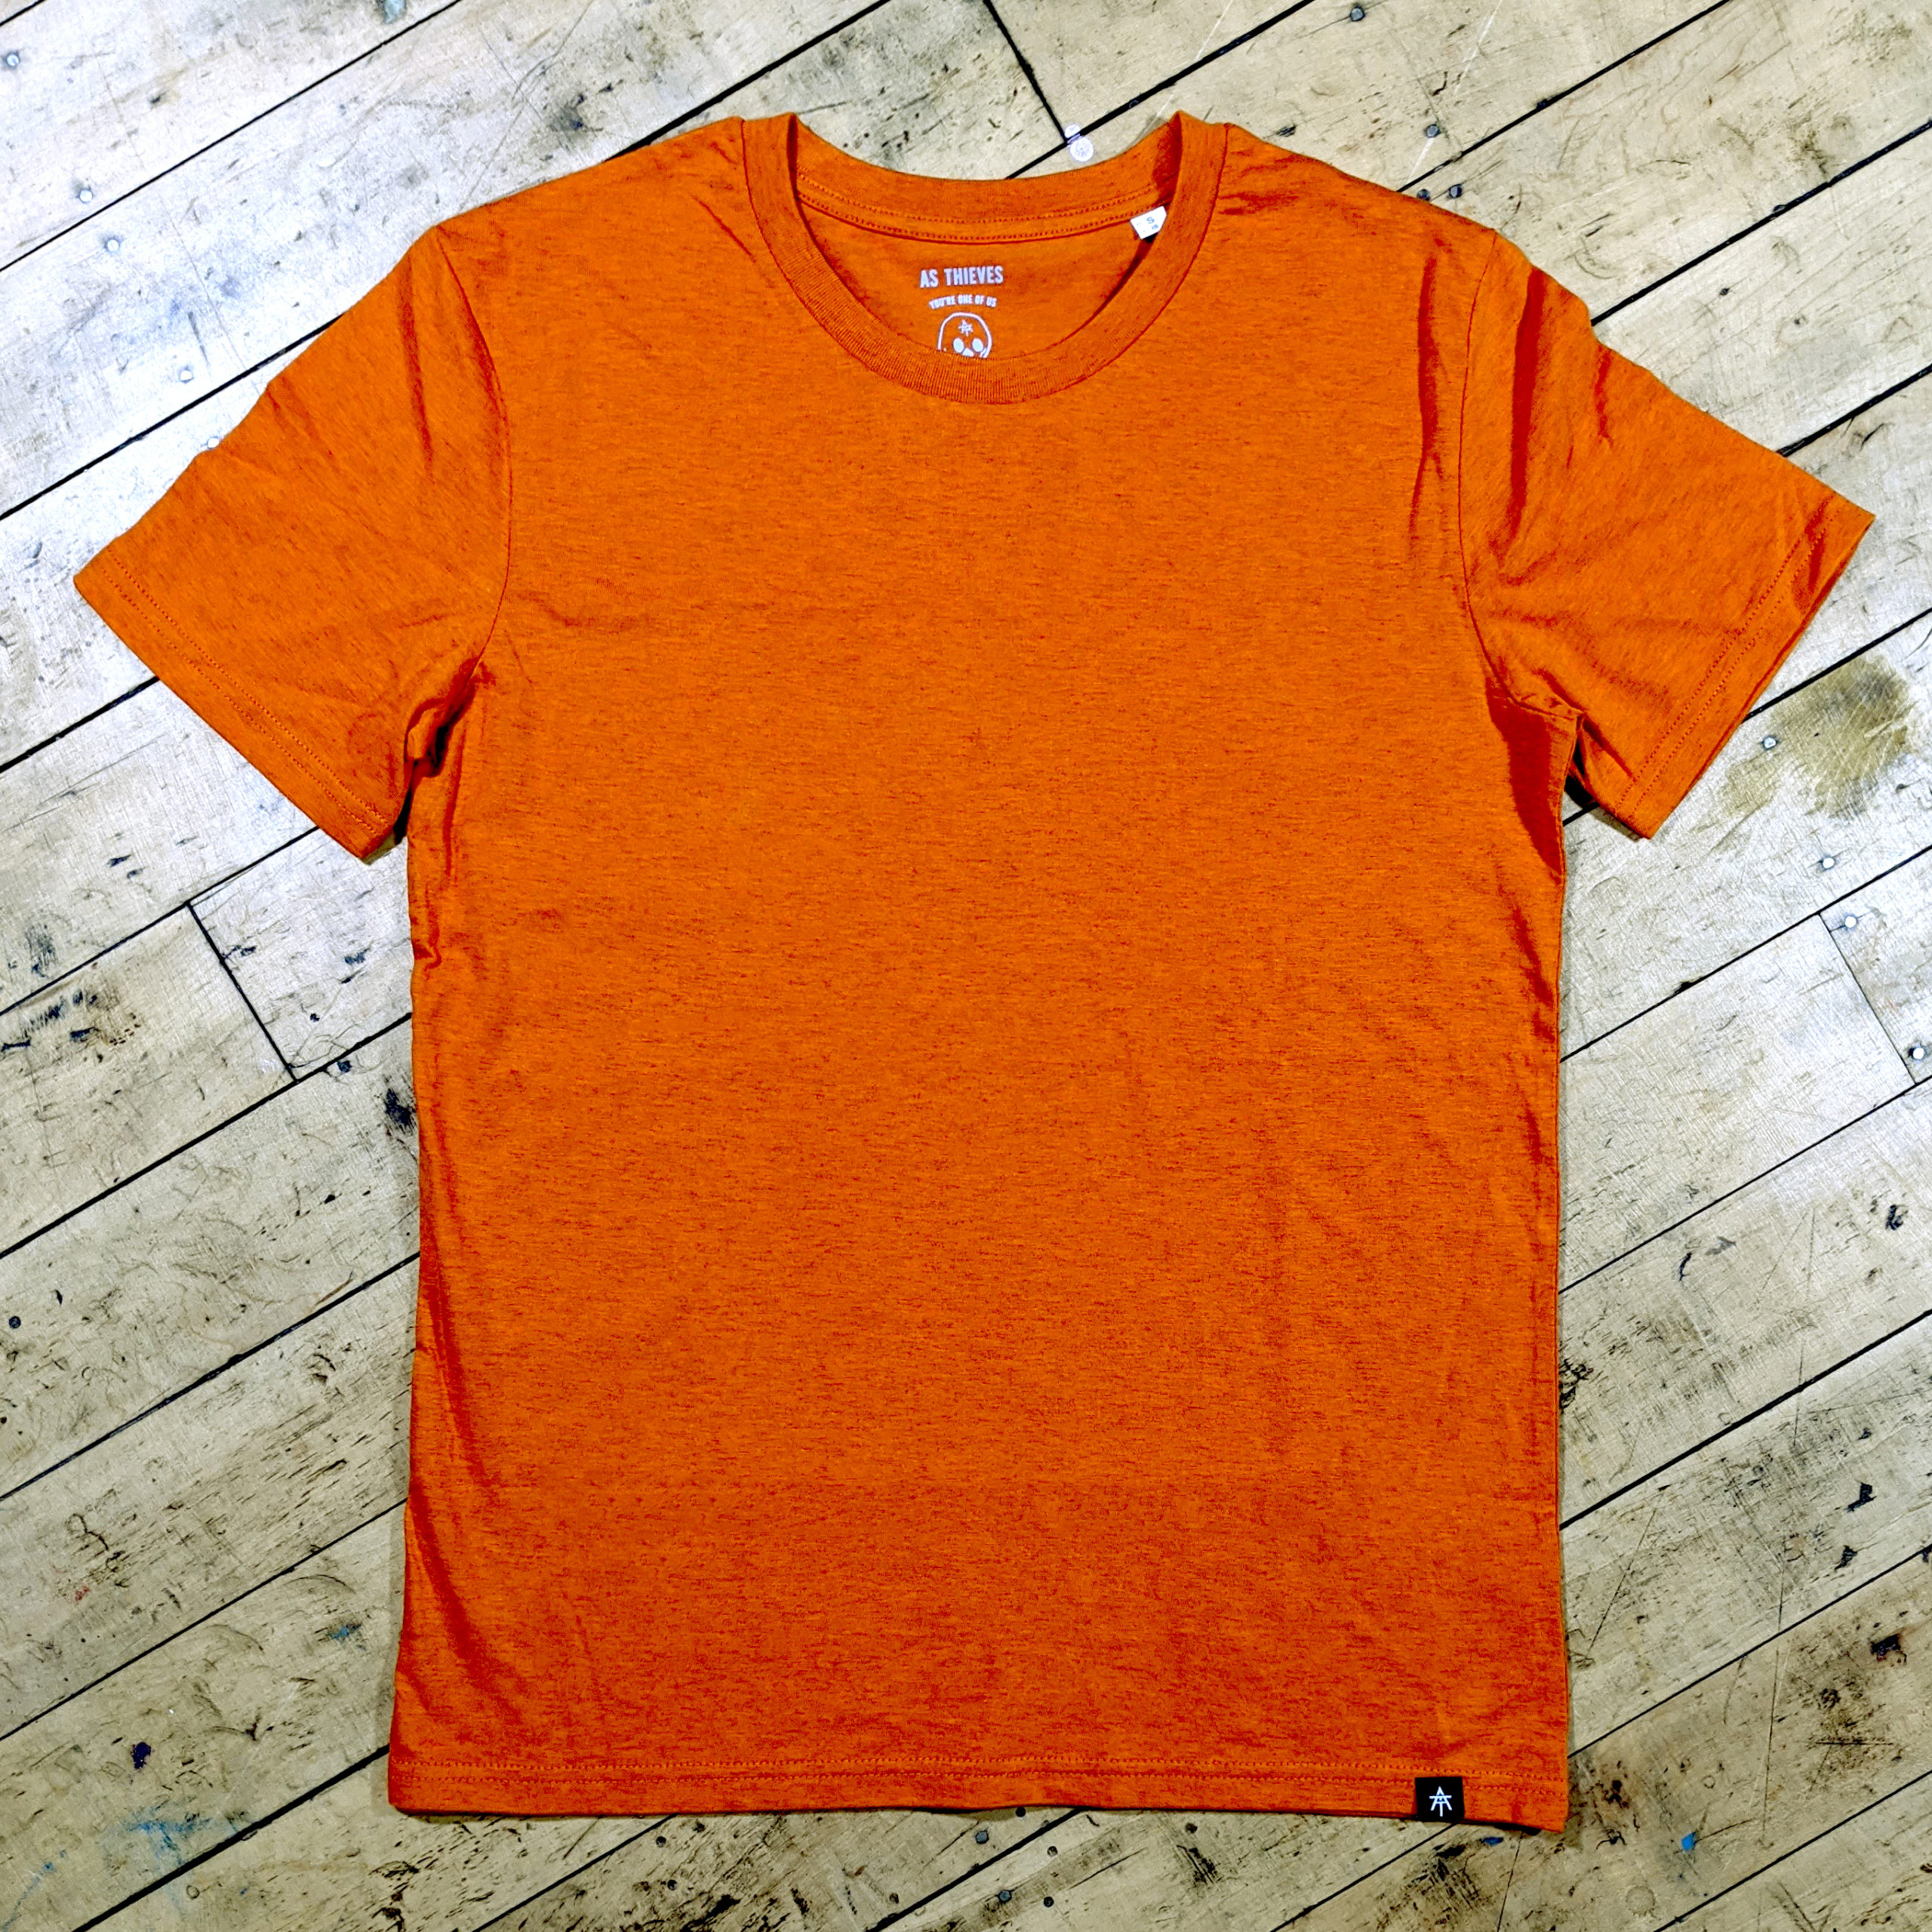 Essentials - Orange T-shirt • As Thieves